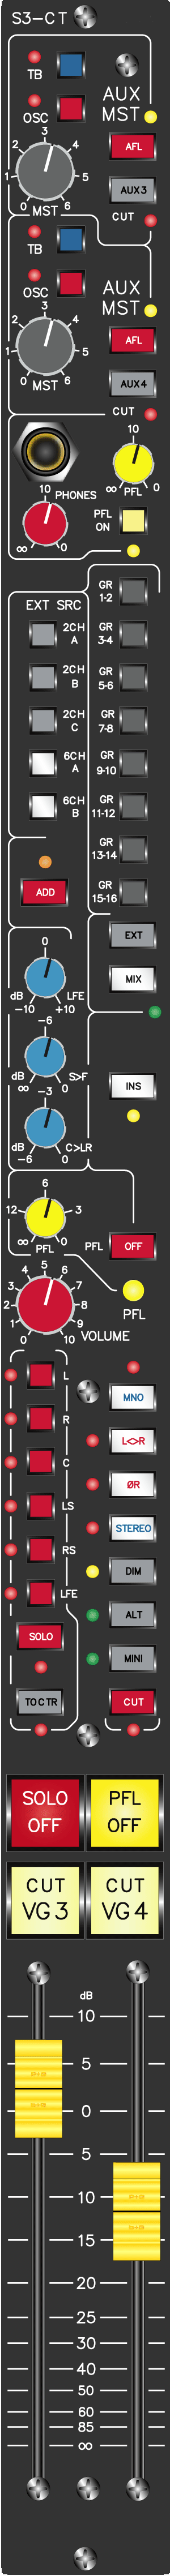 Control Module S3-CT Top Plate